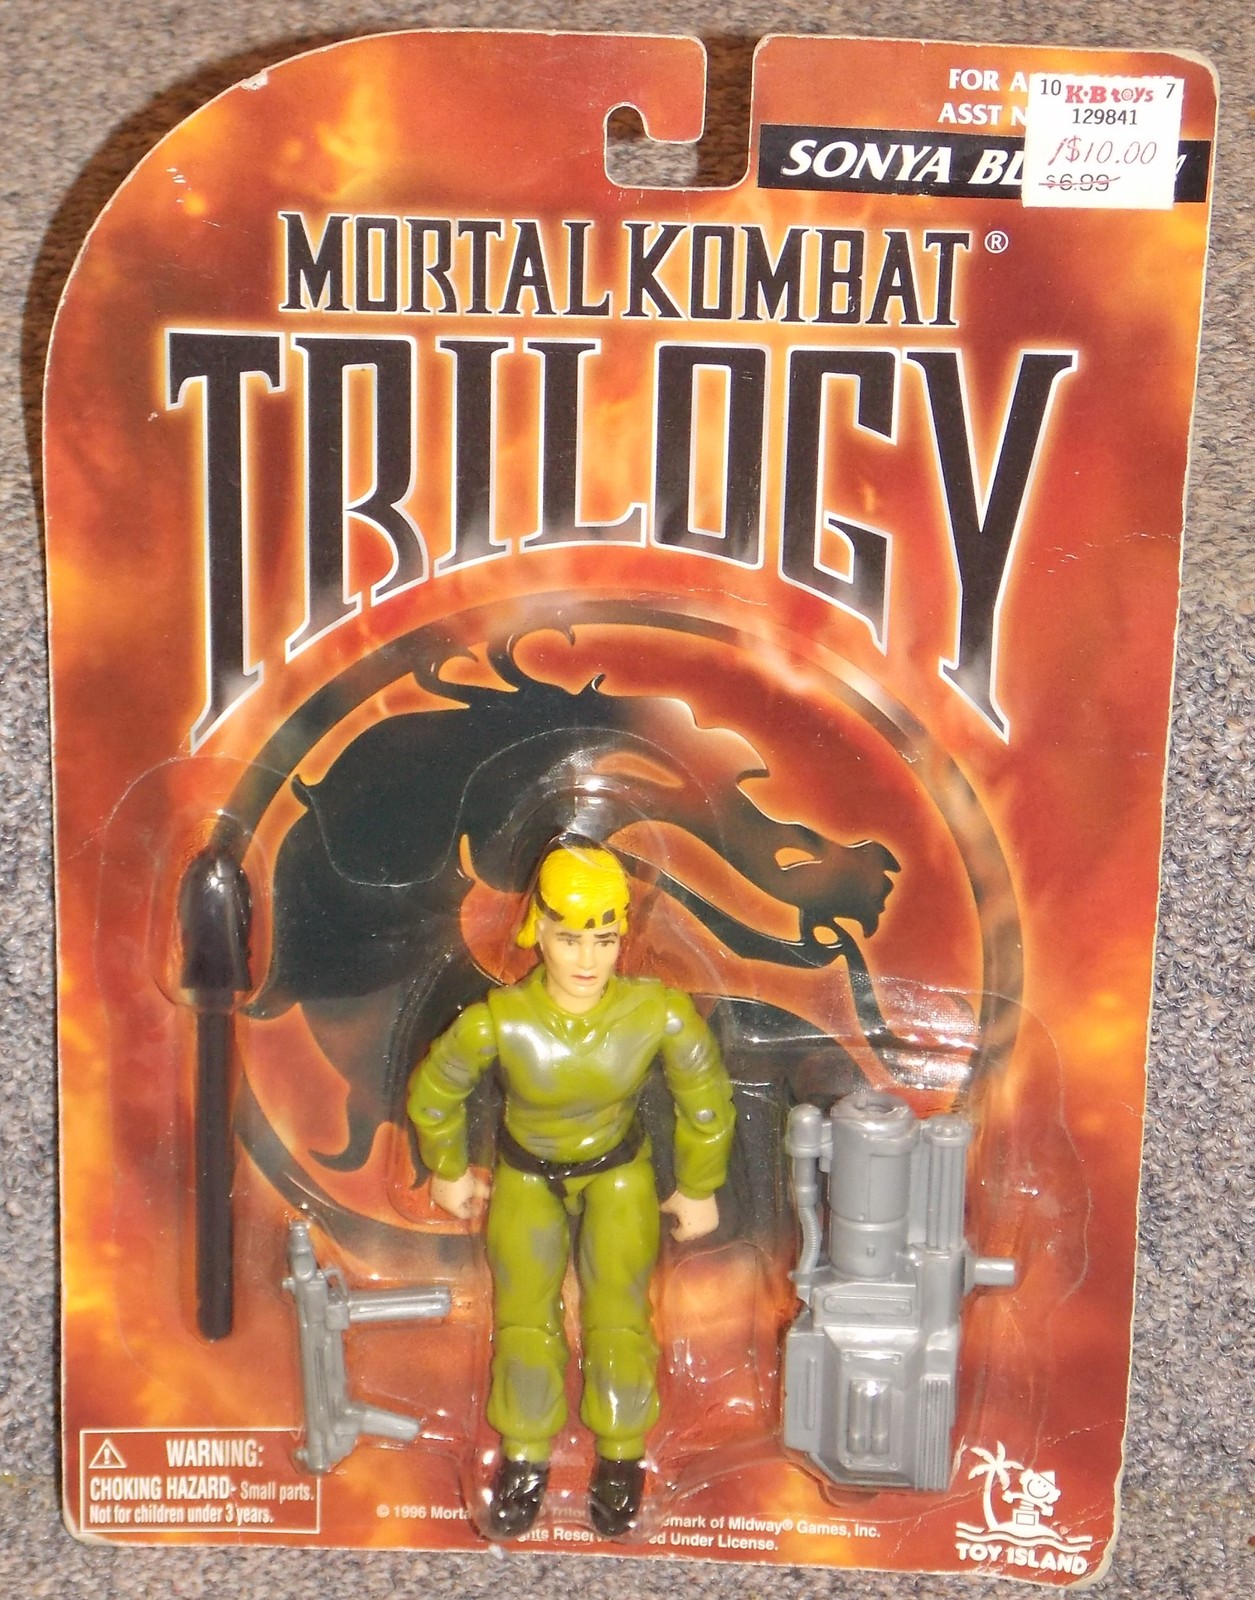 1996 Mortal Kombat Trilogy Sonya Blade Figure New In The Package - $29.99